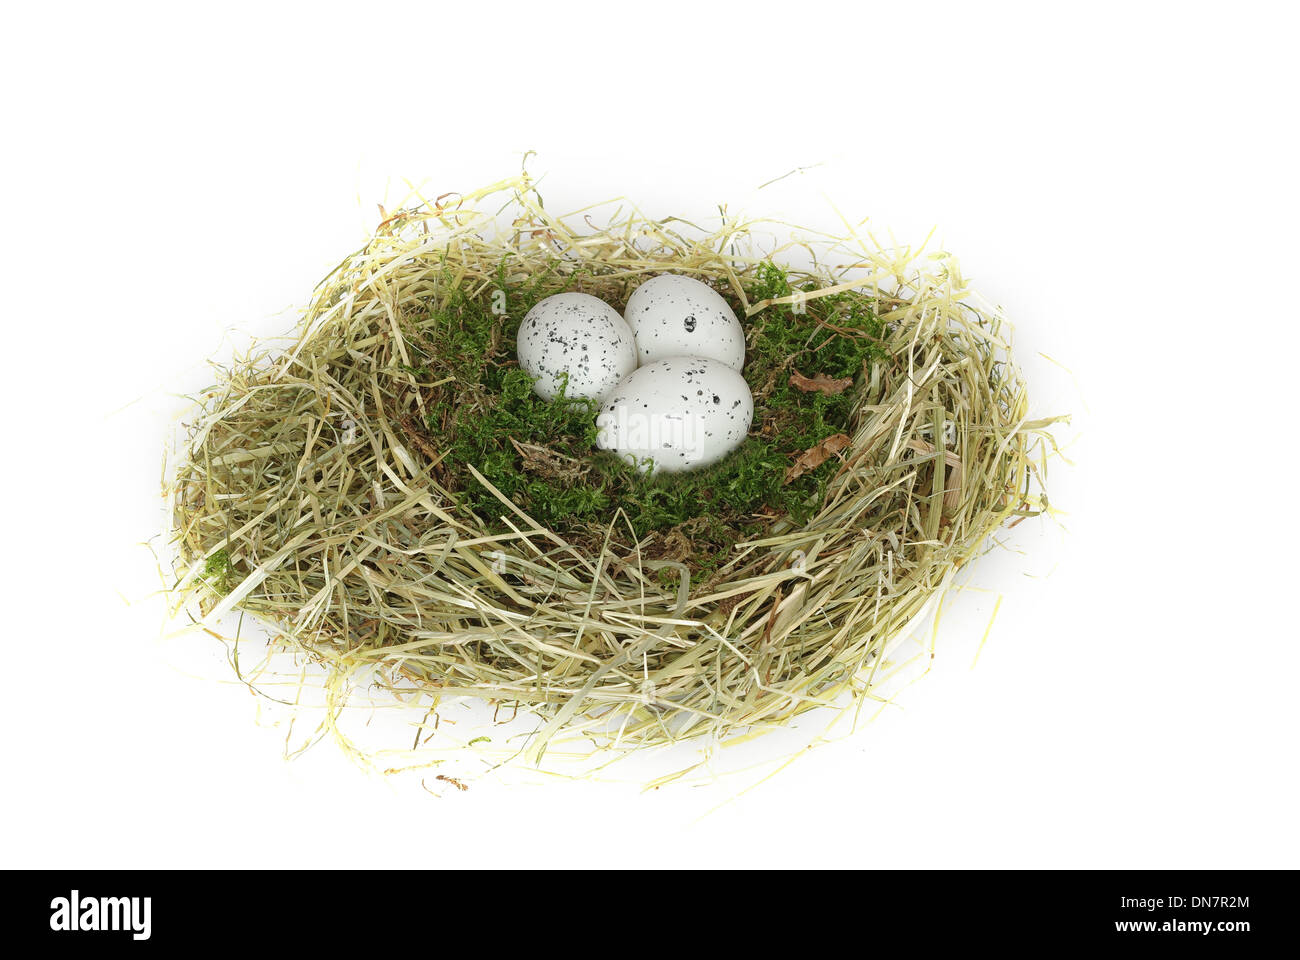 nest with egg on white background Stock Photo